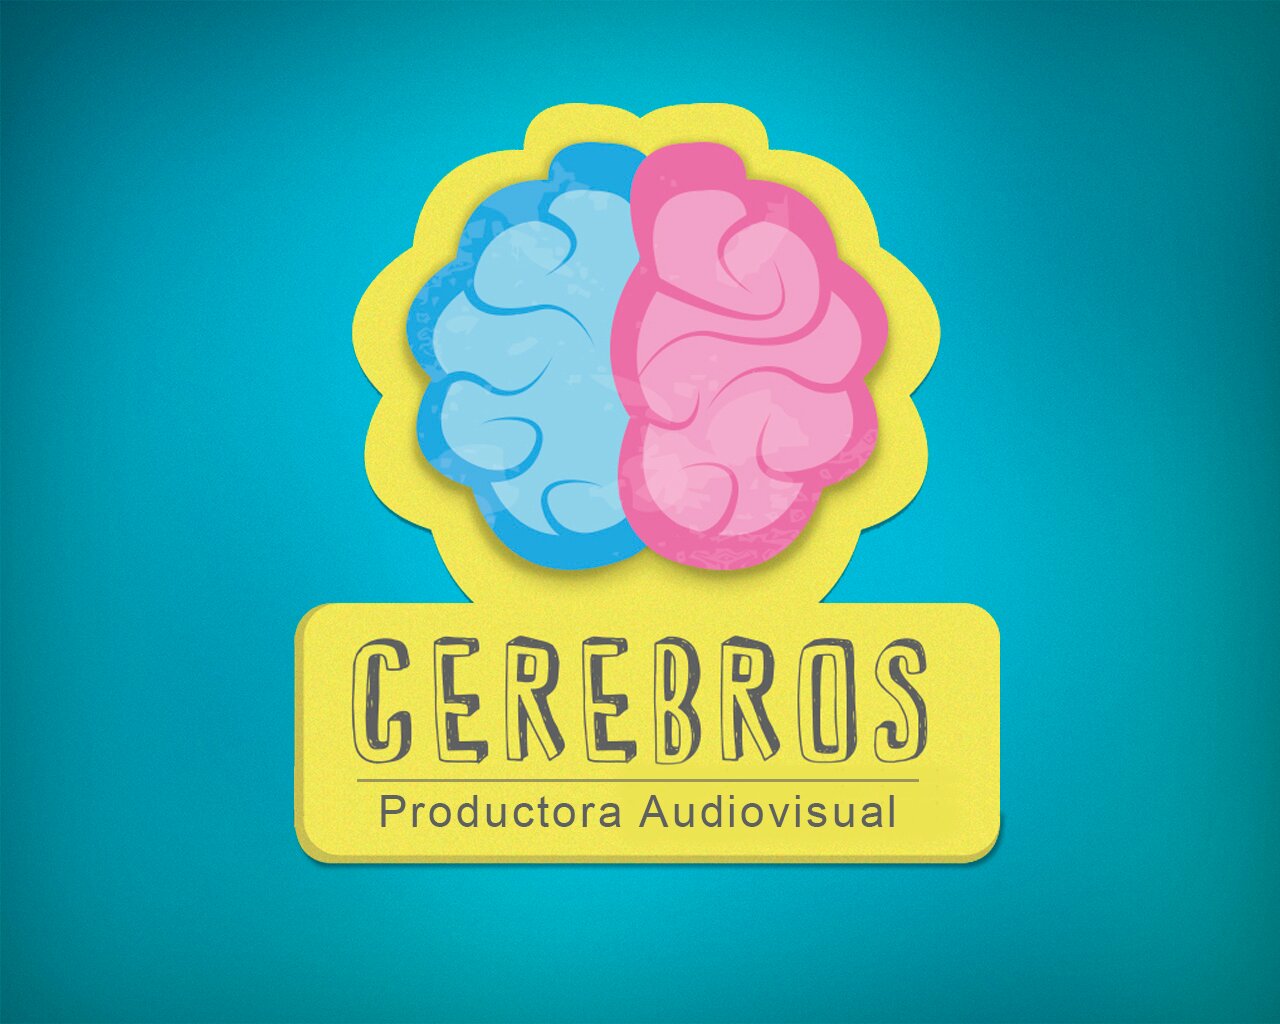 Producciones Audiovisuales 
cerebrosproductora@gmail.com